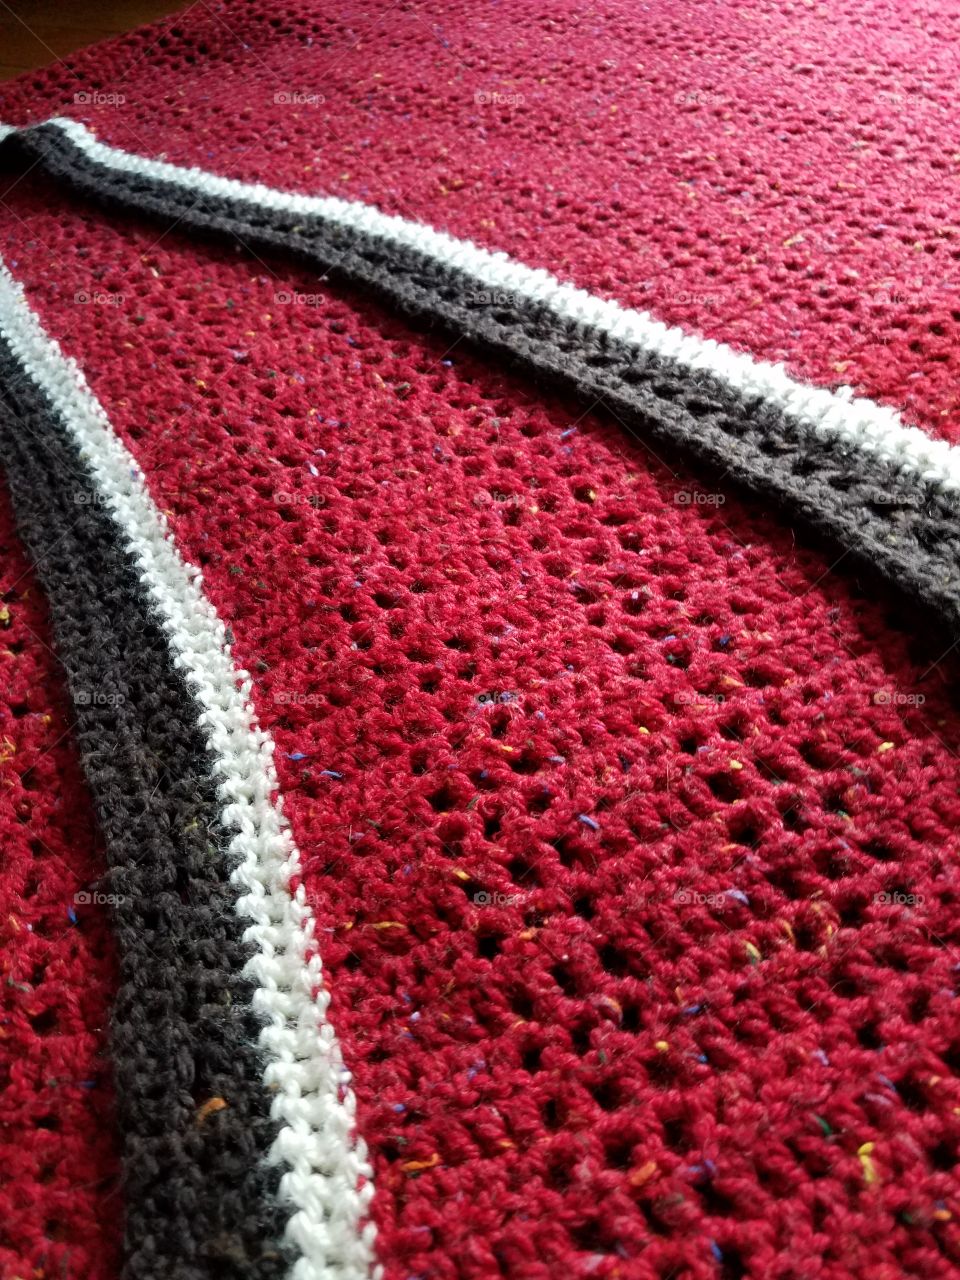 My First Crochet Blanket